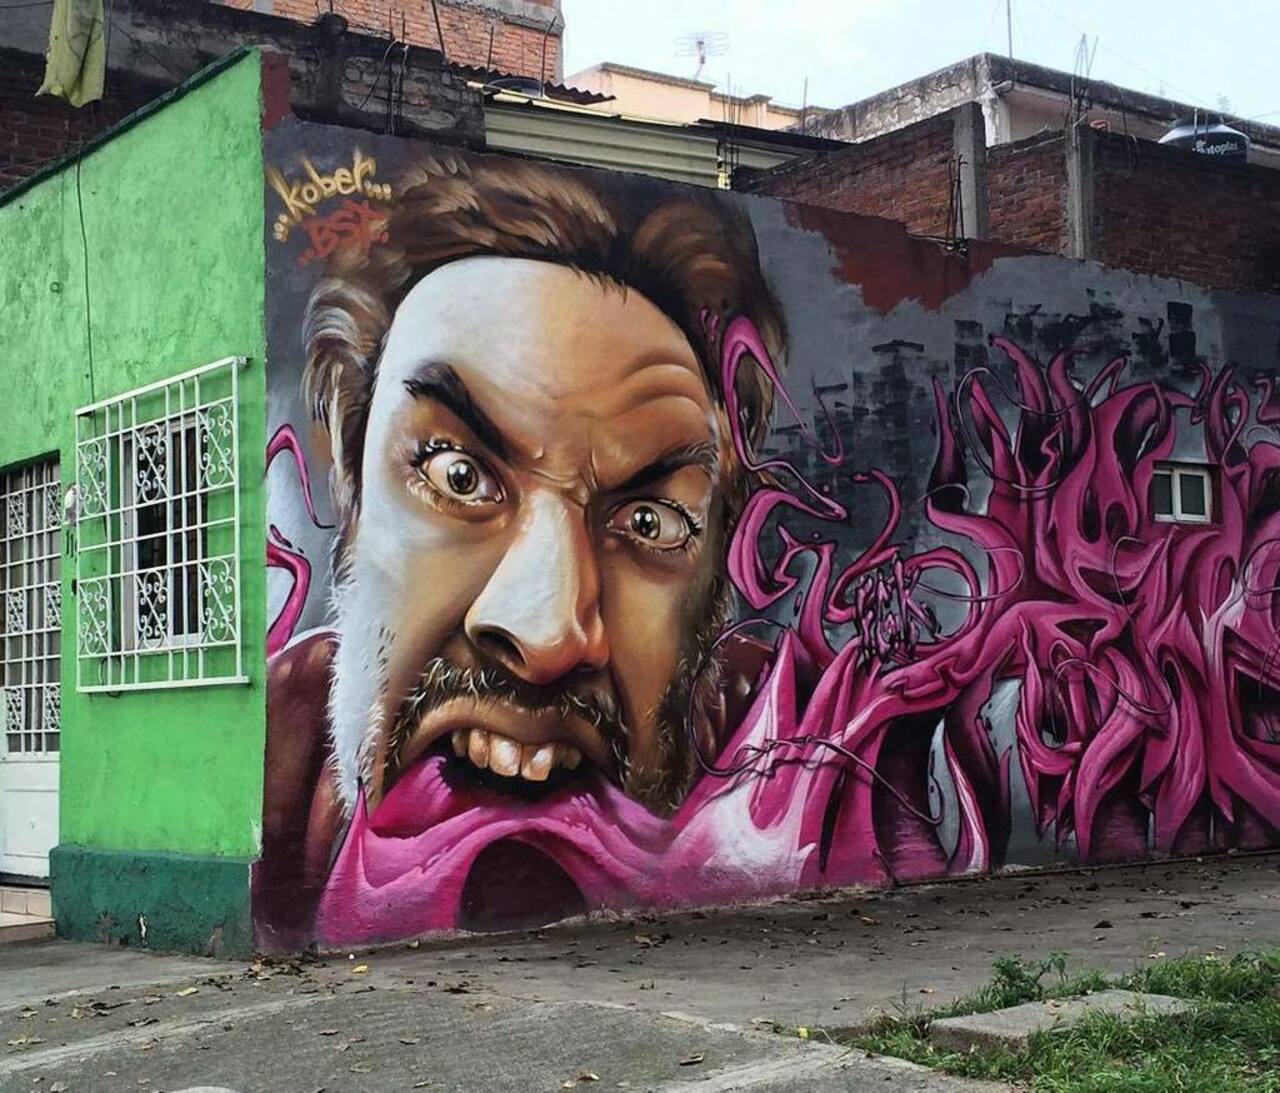 #streetart #arteurbano #urbanart #urban #art #mexico #cdmx #mexicodf #mural #graffiti #streetartmexico #urbanwalls … http://t.co/vRczAgapC4